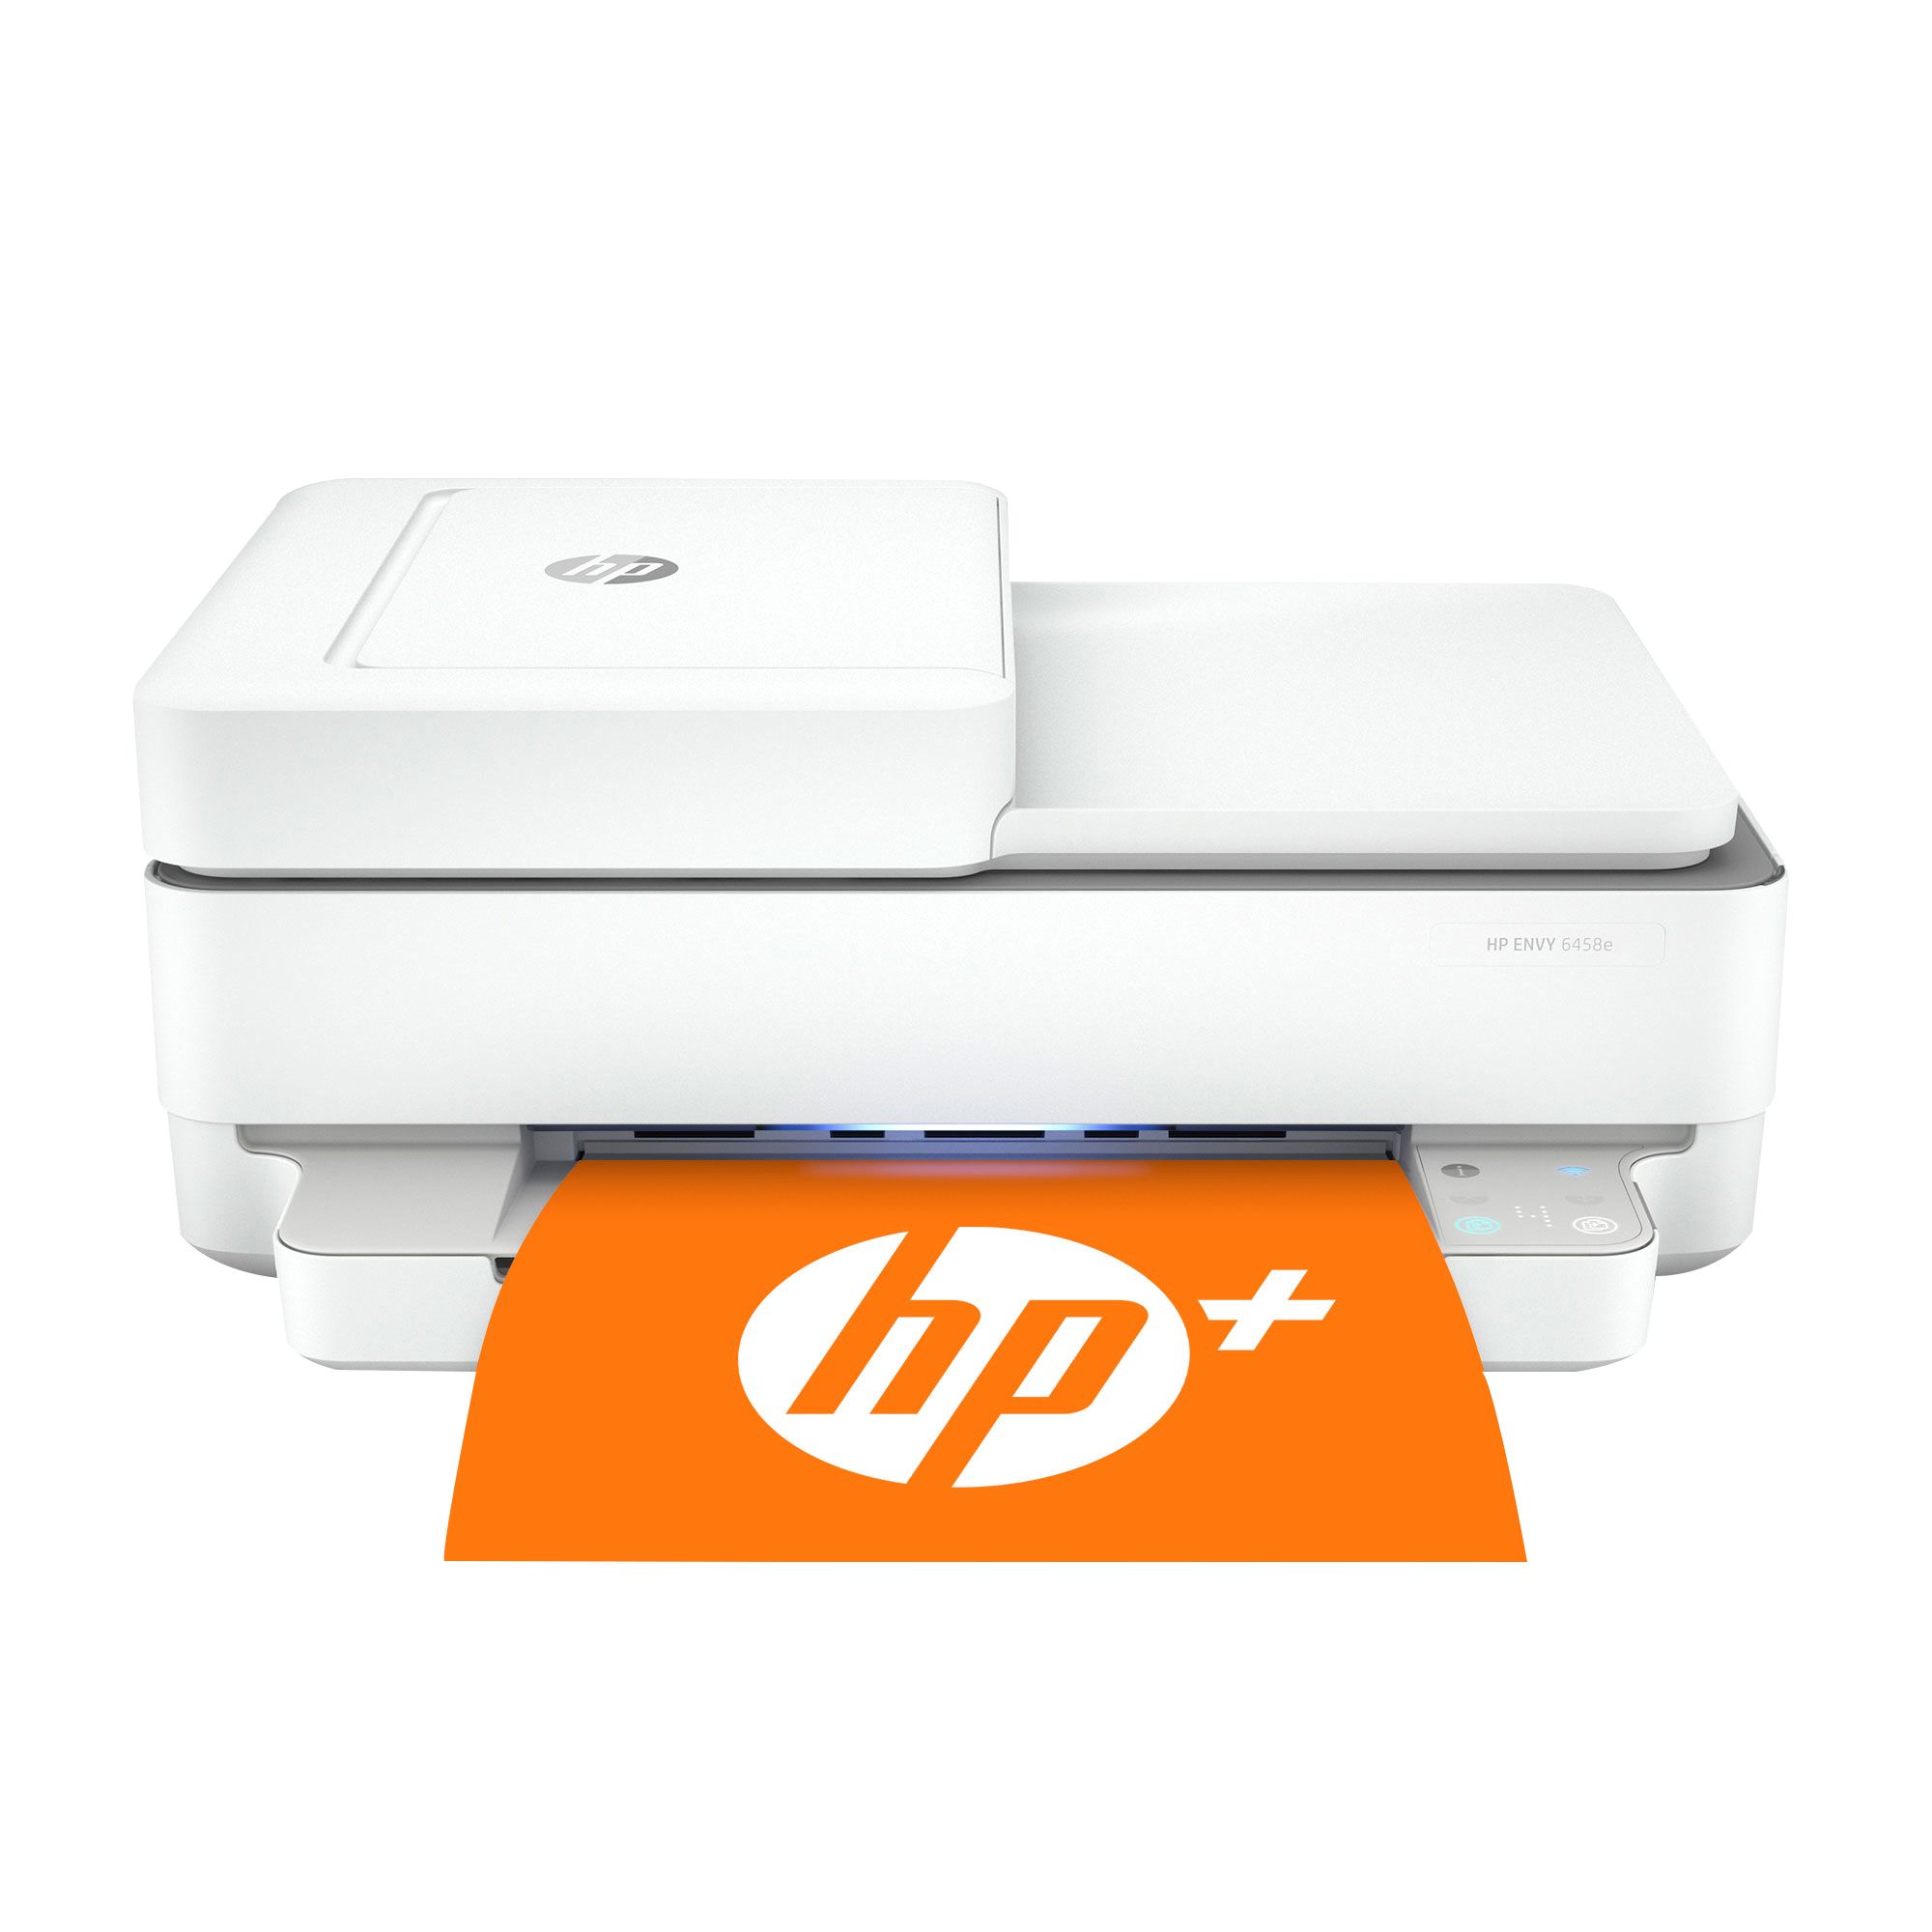 Discreet Monografie Universiteit HP ENVY 6458e All-in-One Wireless Printer - BJs Wholesale Club